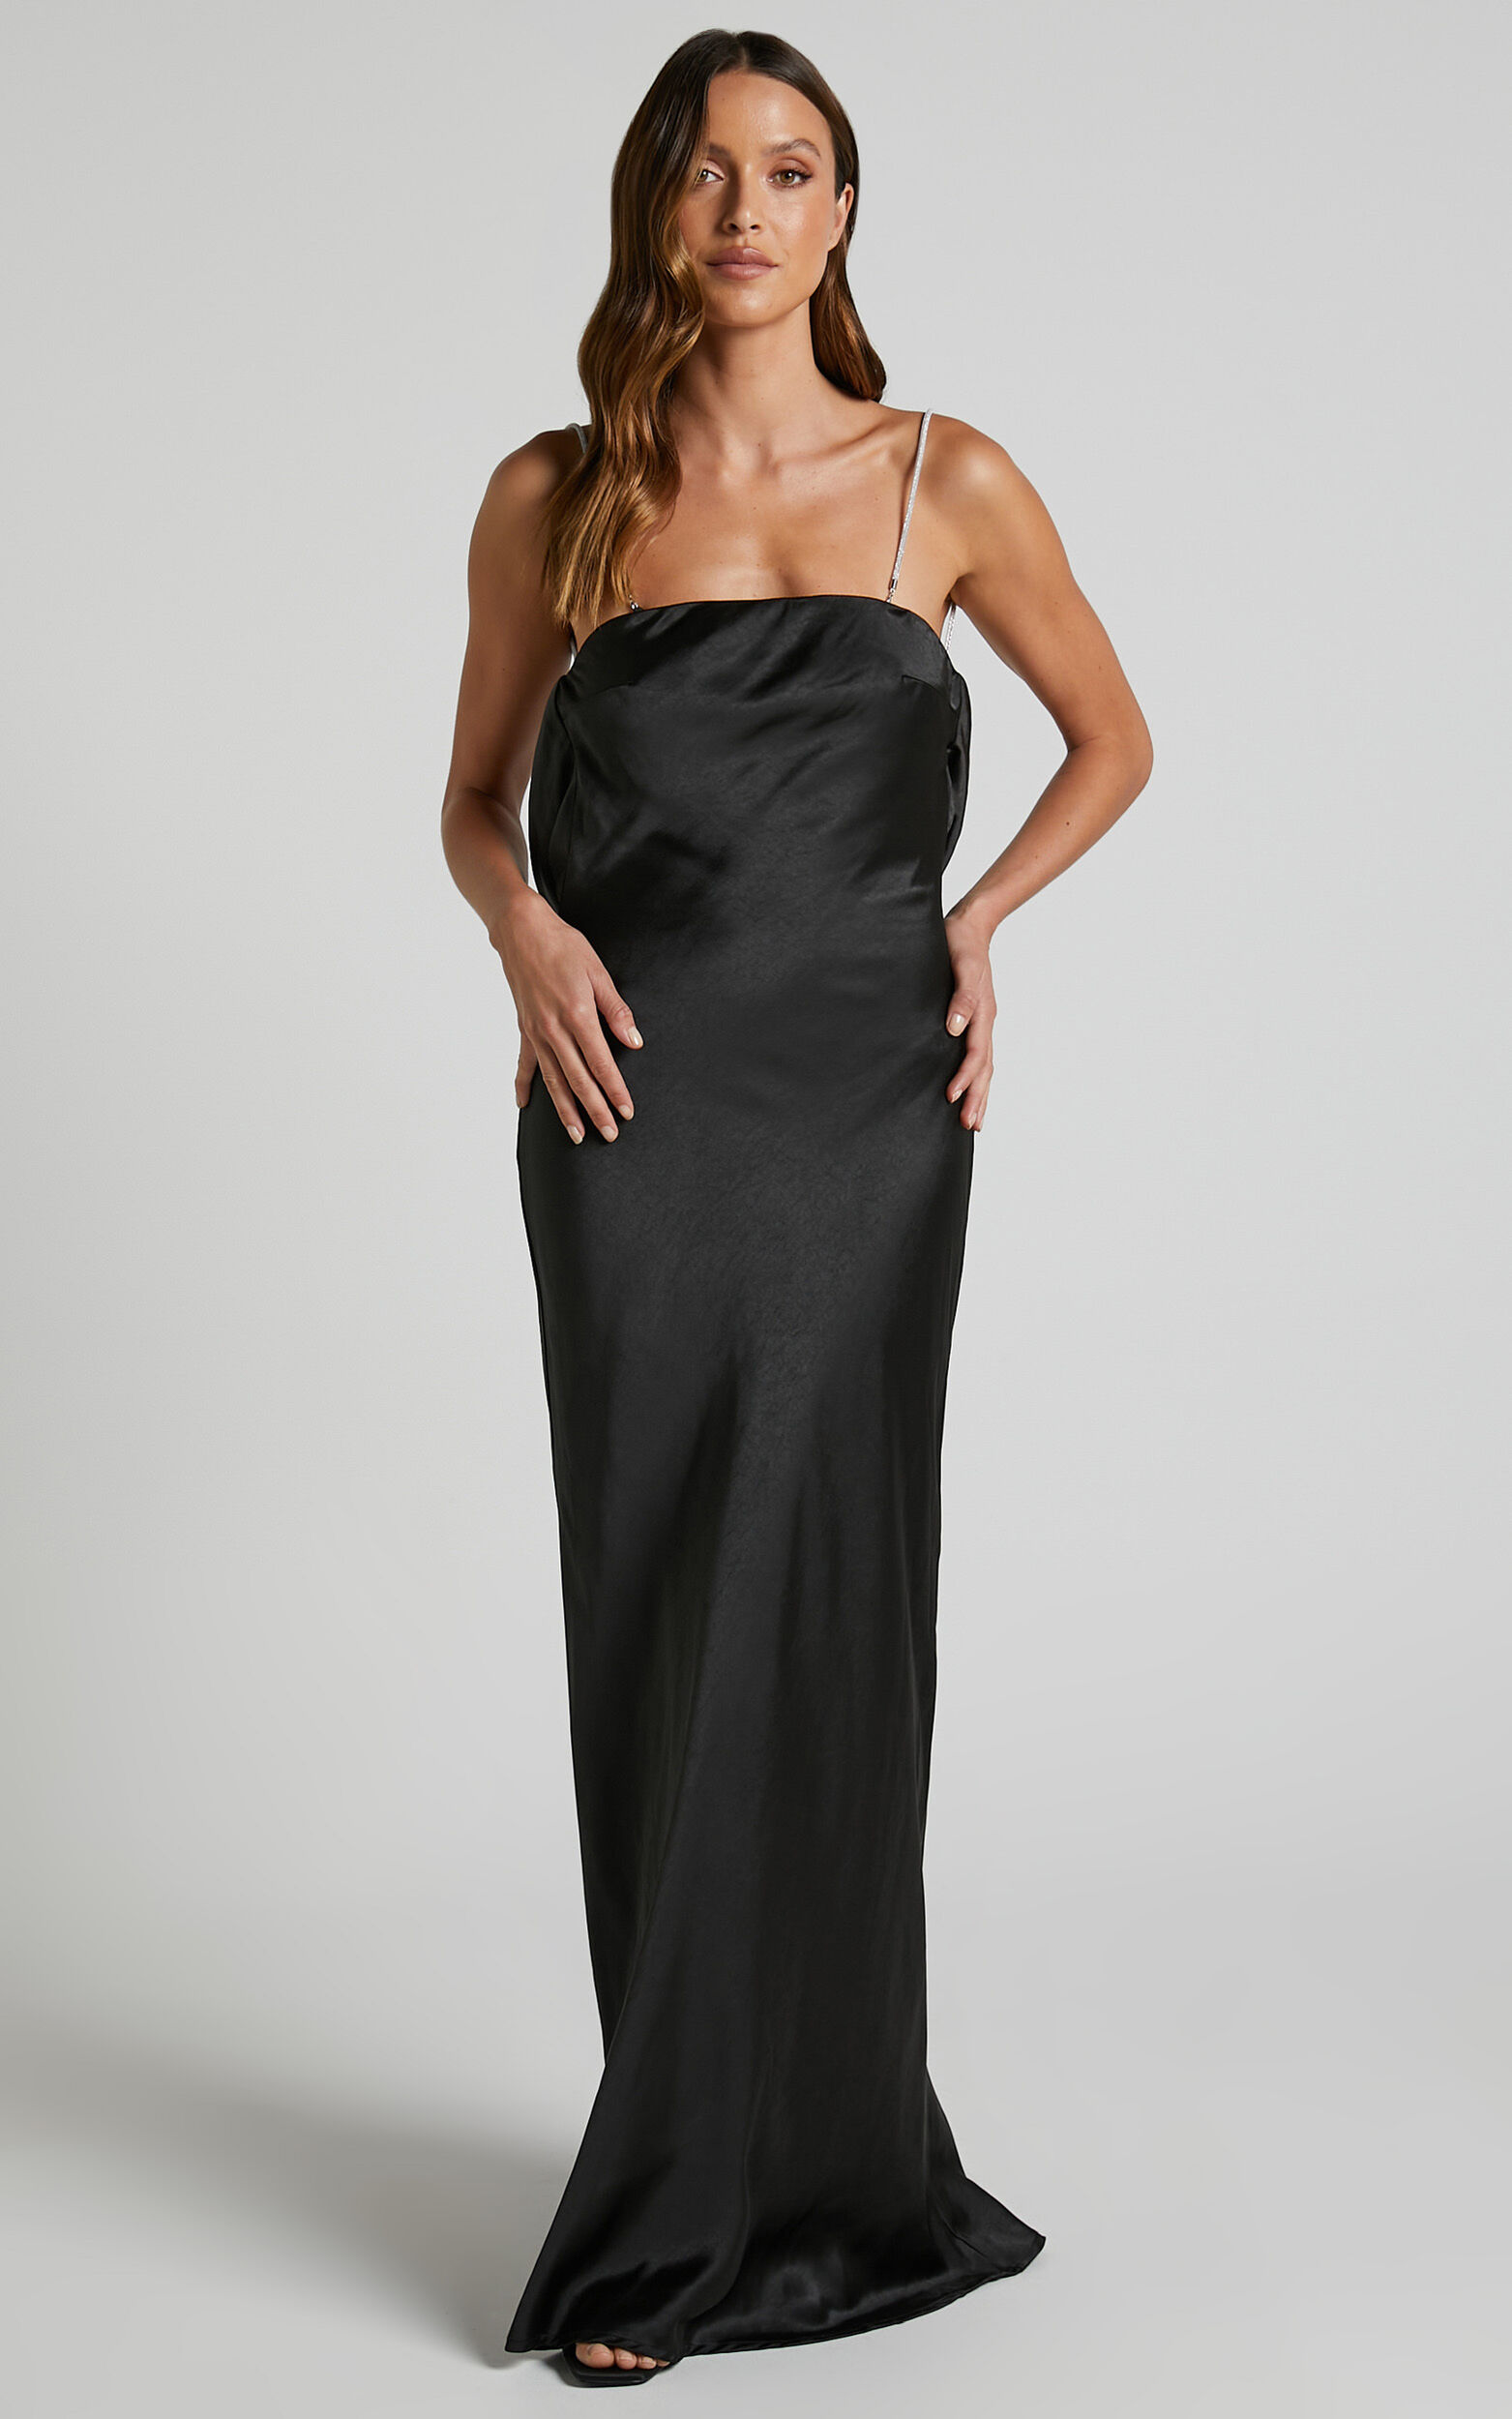 Arichie Maxi Dress - Cowl Back Diamante Strap Satin Dress in Black - 04, BLK1